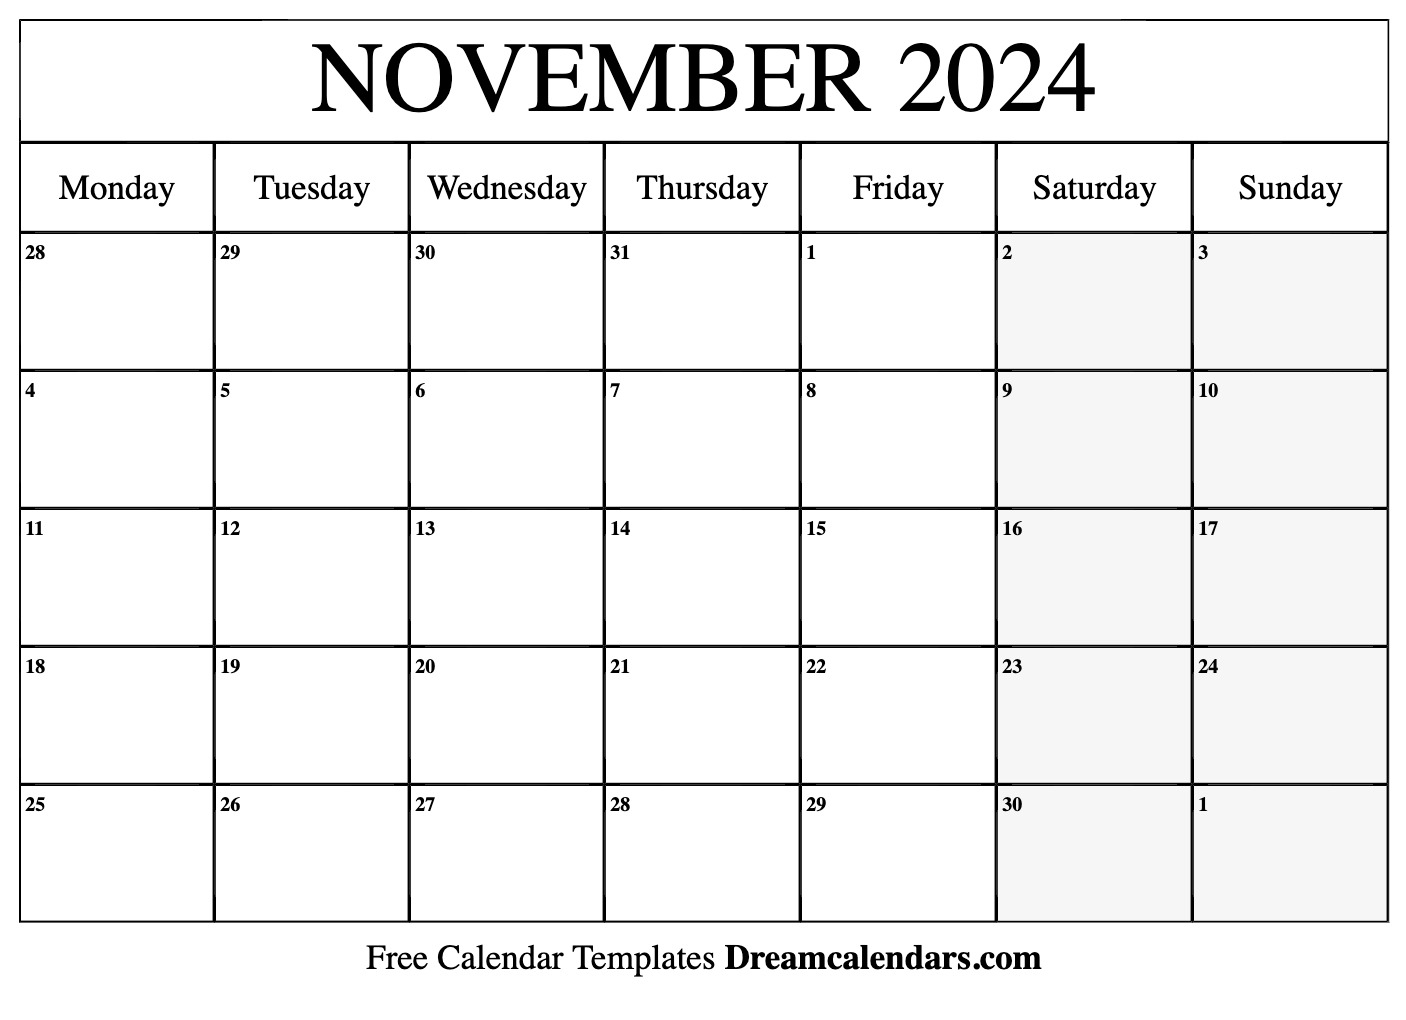 November 2024 Calendar | Free Blank Printable With Holidays for Free Printable November 2024 Calendar